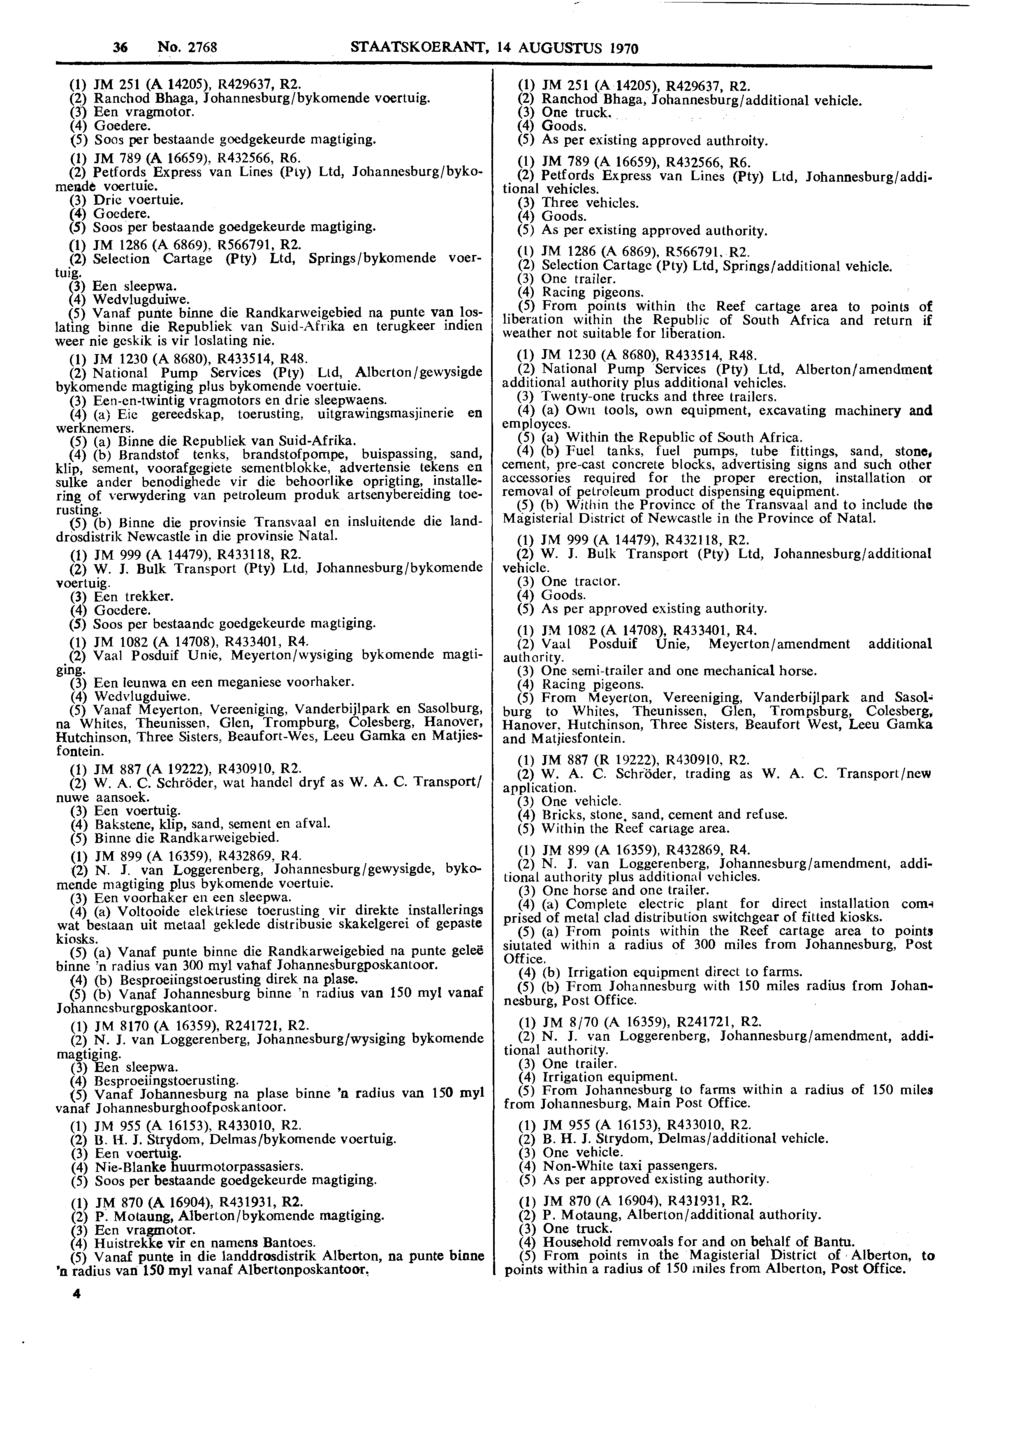 36 No. 2768 STAATSKOERANT. 14 AUGUSTUS 1970 (1) JM 251 (A 14205), R429637, R2. (2) Ranchod Bhaga, Johannesburg/bykornende voertuig. (31 Een vragrnotor. (4) Goedere.